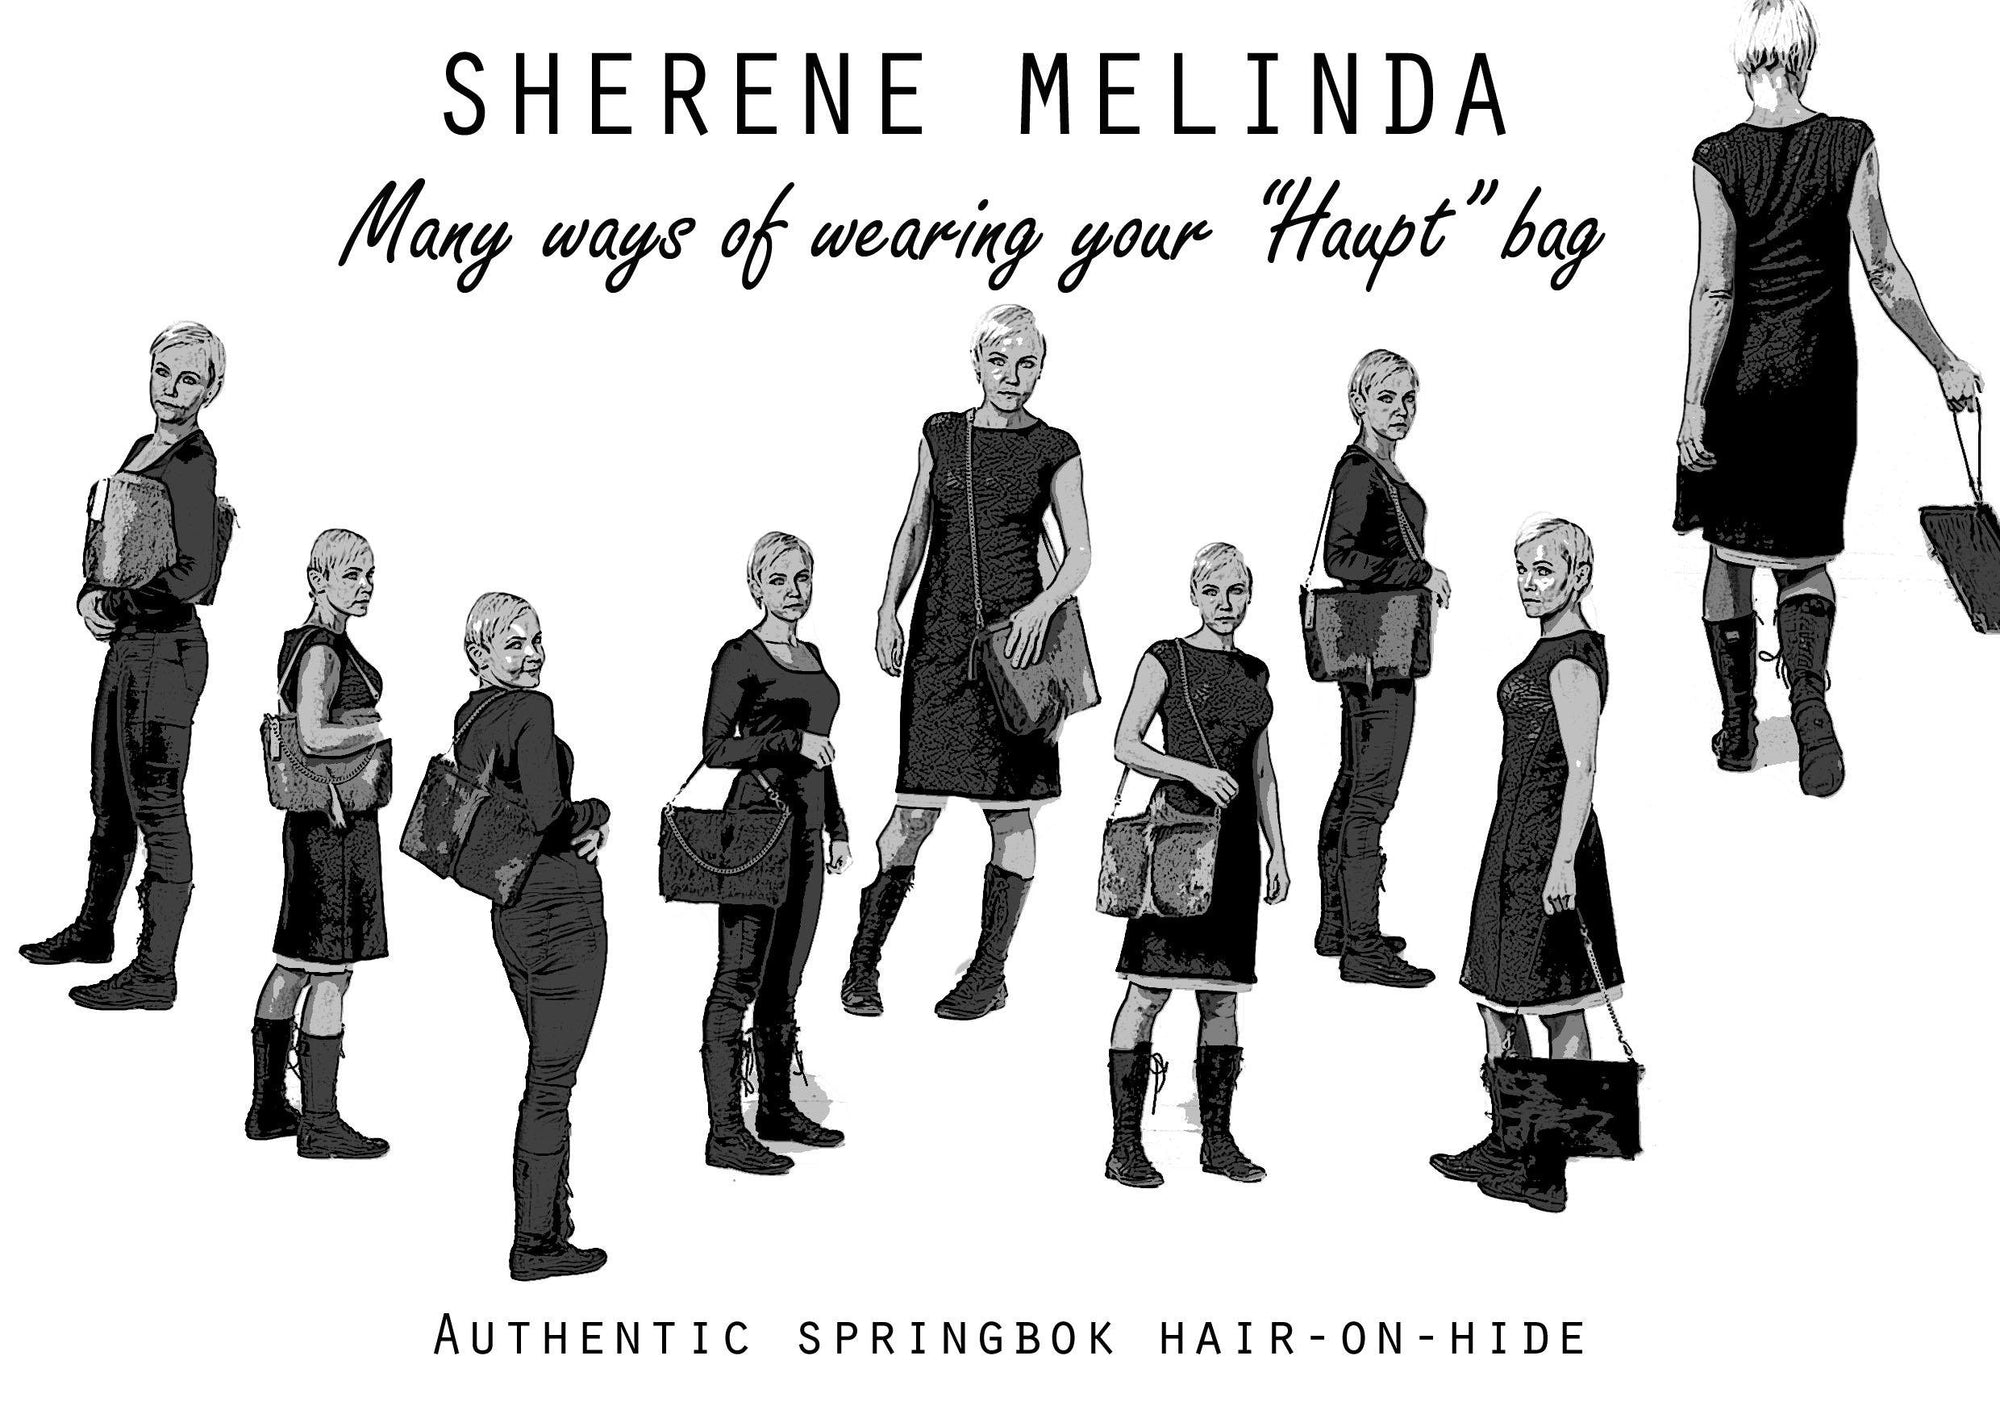 The many ways of wearing your Haupt Bag - SHERENE MELINDA